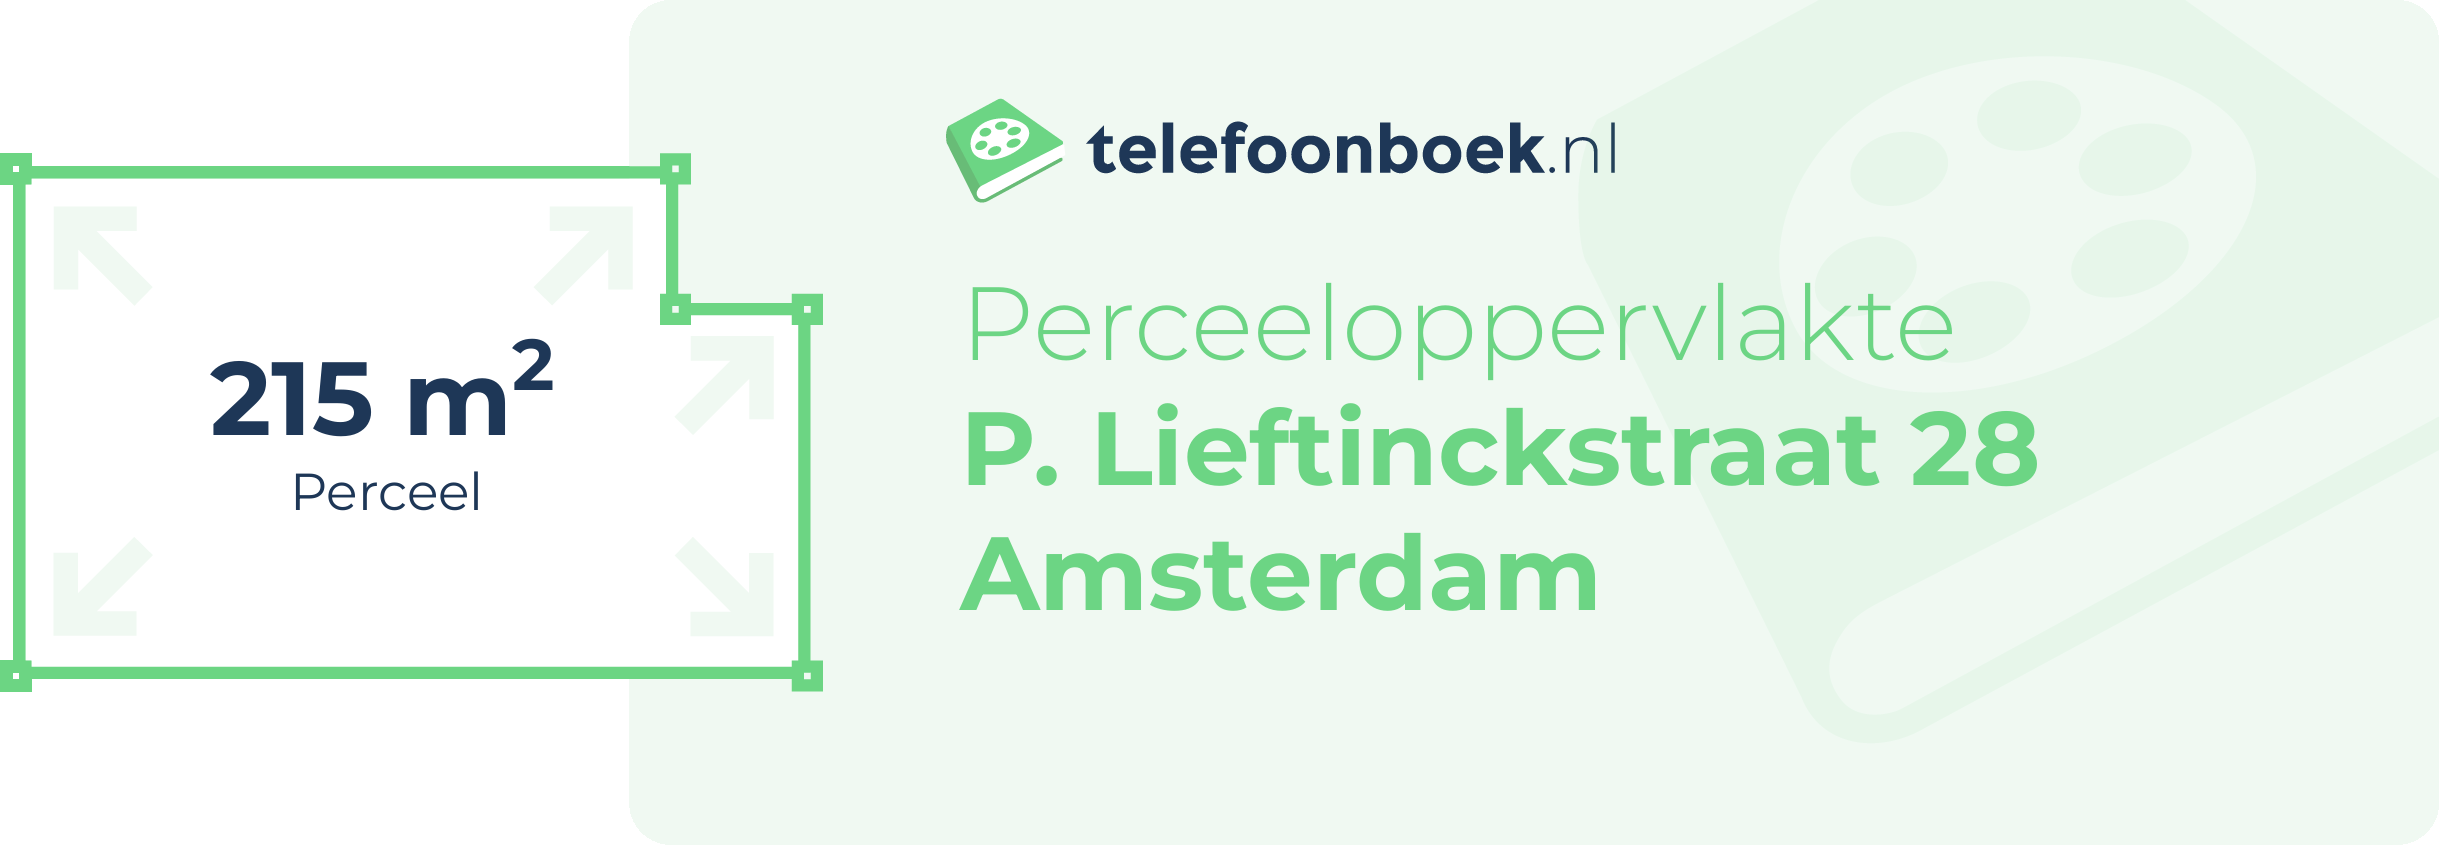 Perceeloppervlakte P. Lieftinckstraat 28 Amsterdam